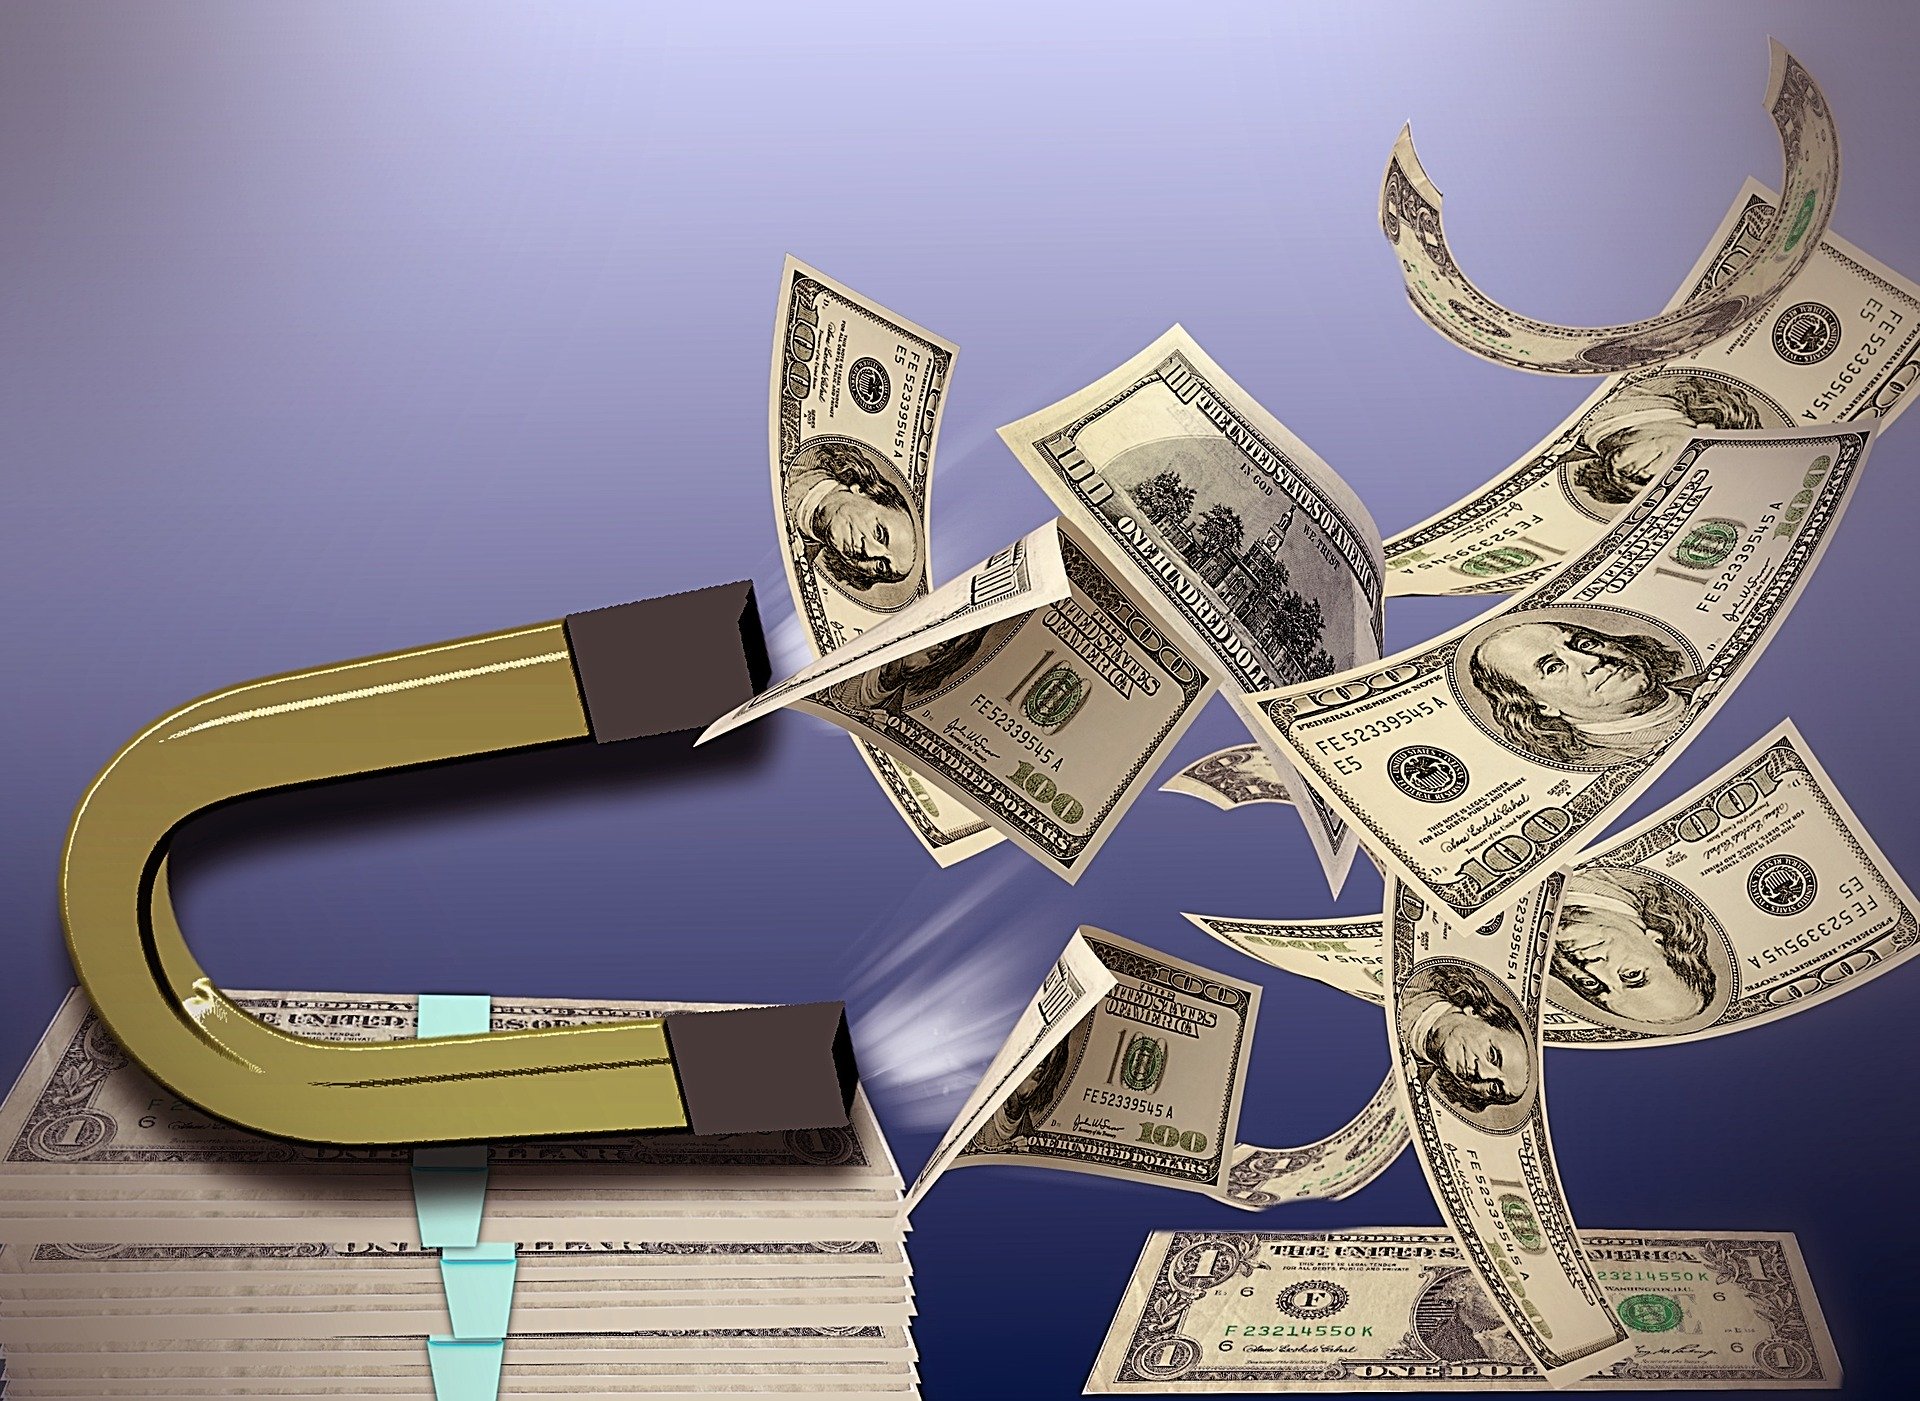 Cartoon magnet pulling 100-dollar bills in a forex scam